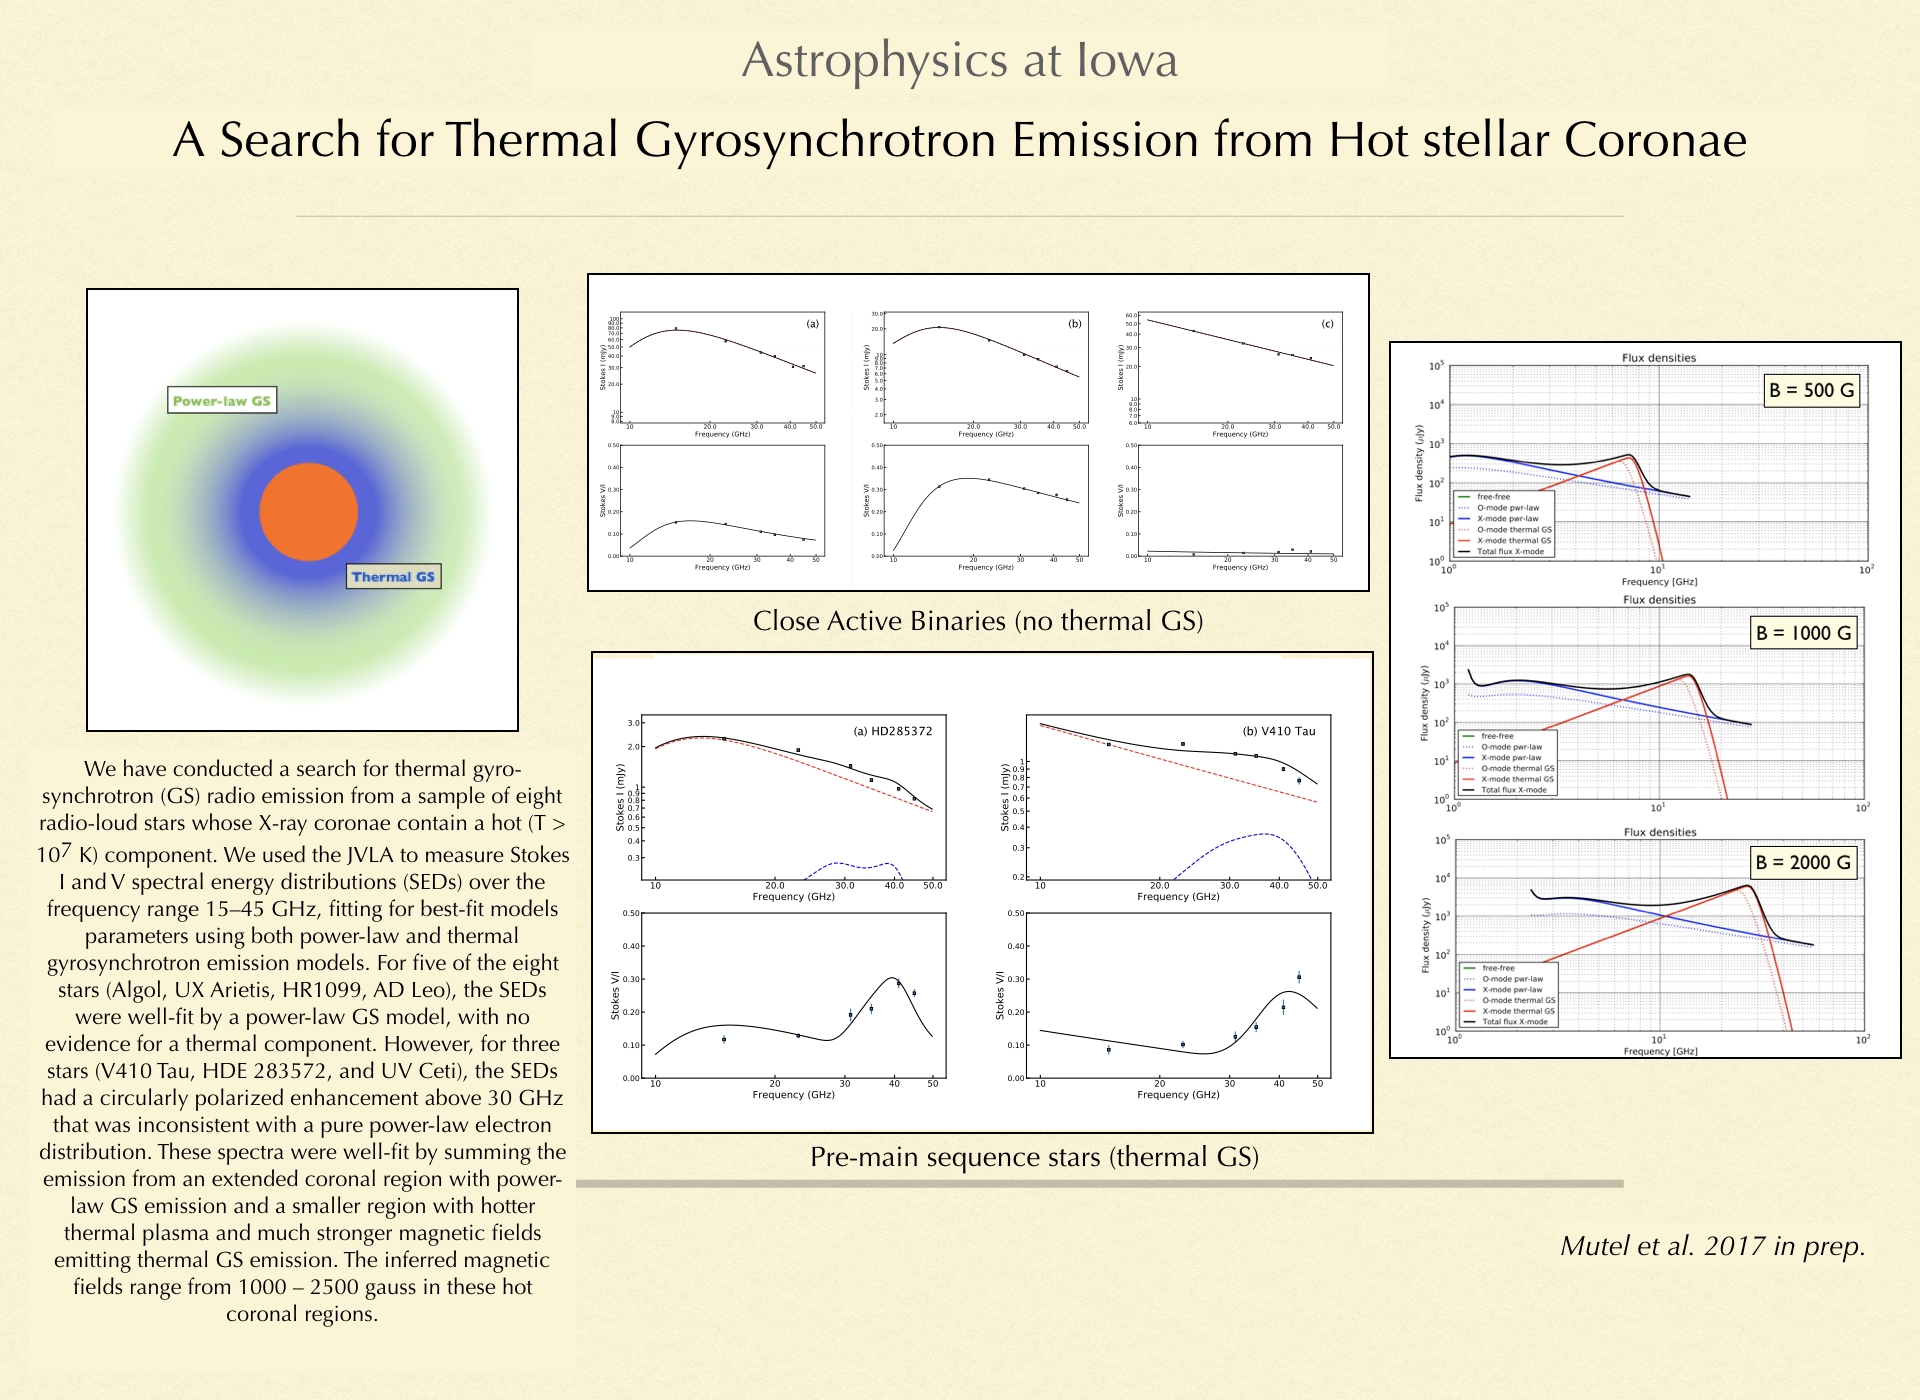 Thermal gyrosynchrotron paper